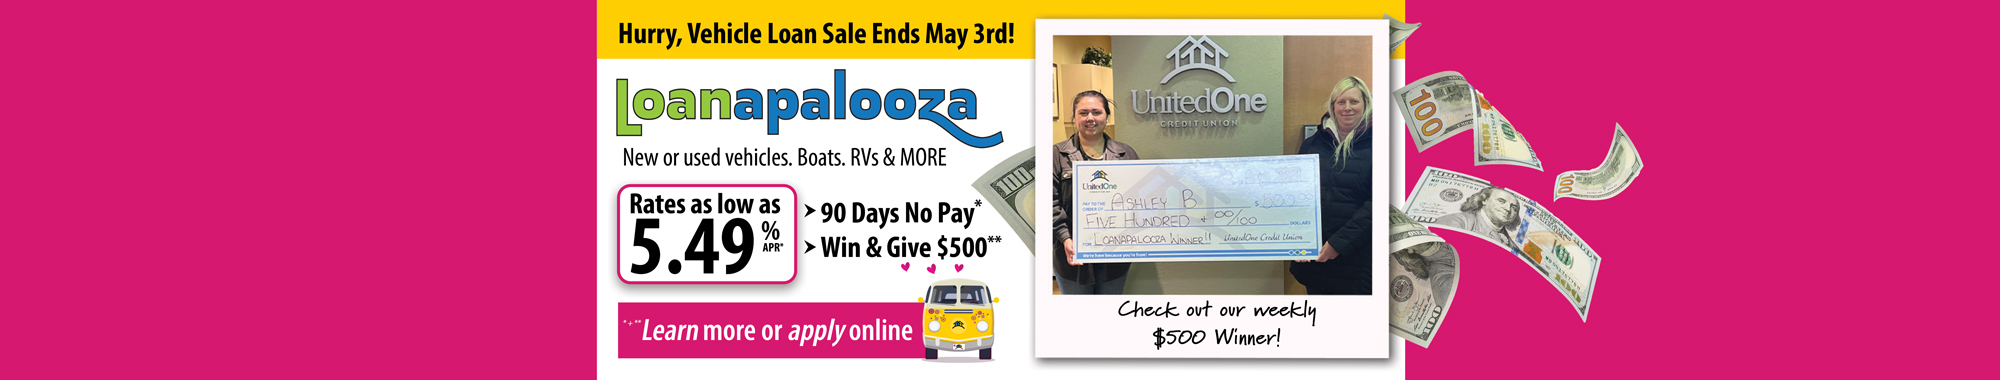 UnitedOne CU Vehicle Loan Sale $500 Winner!